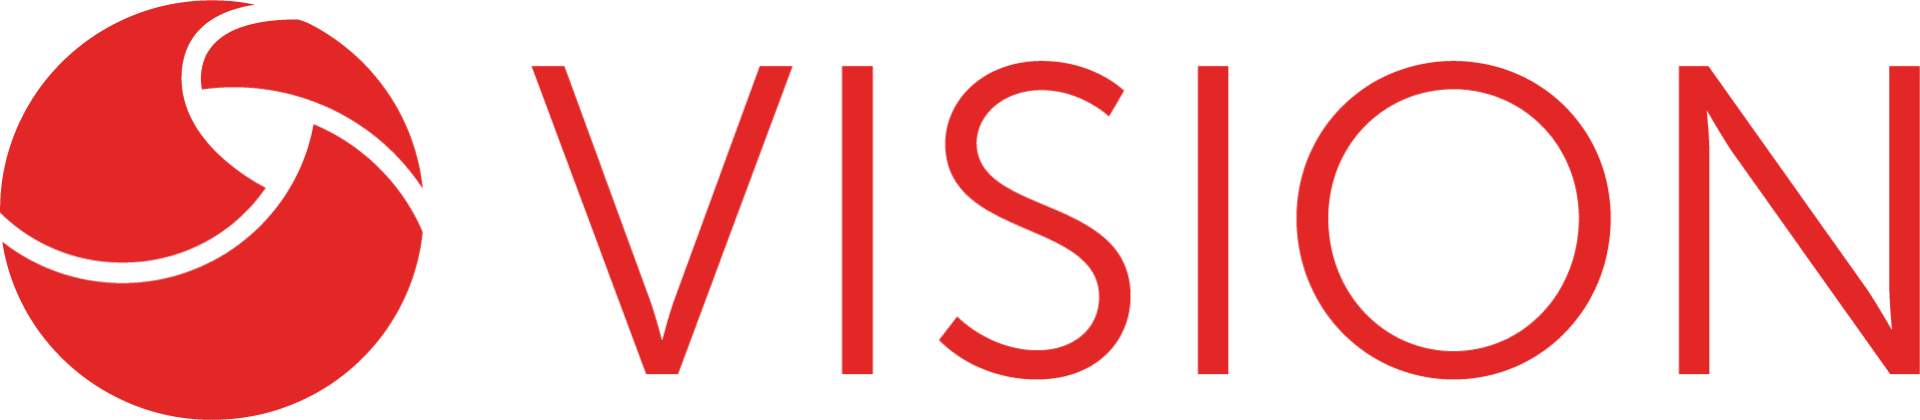 Vision brand logo